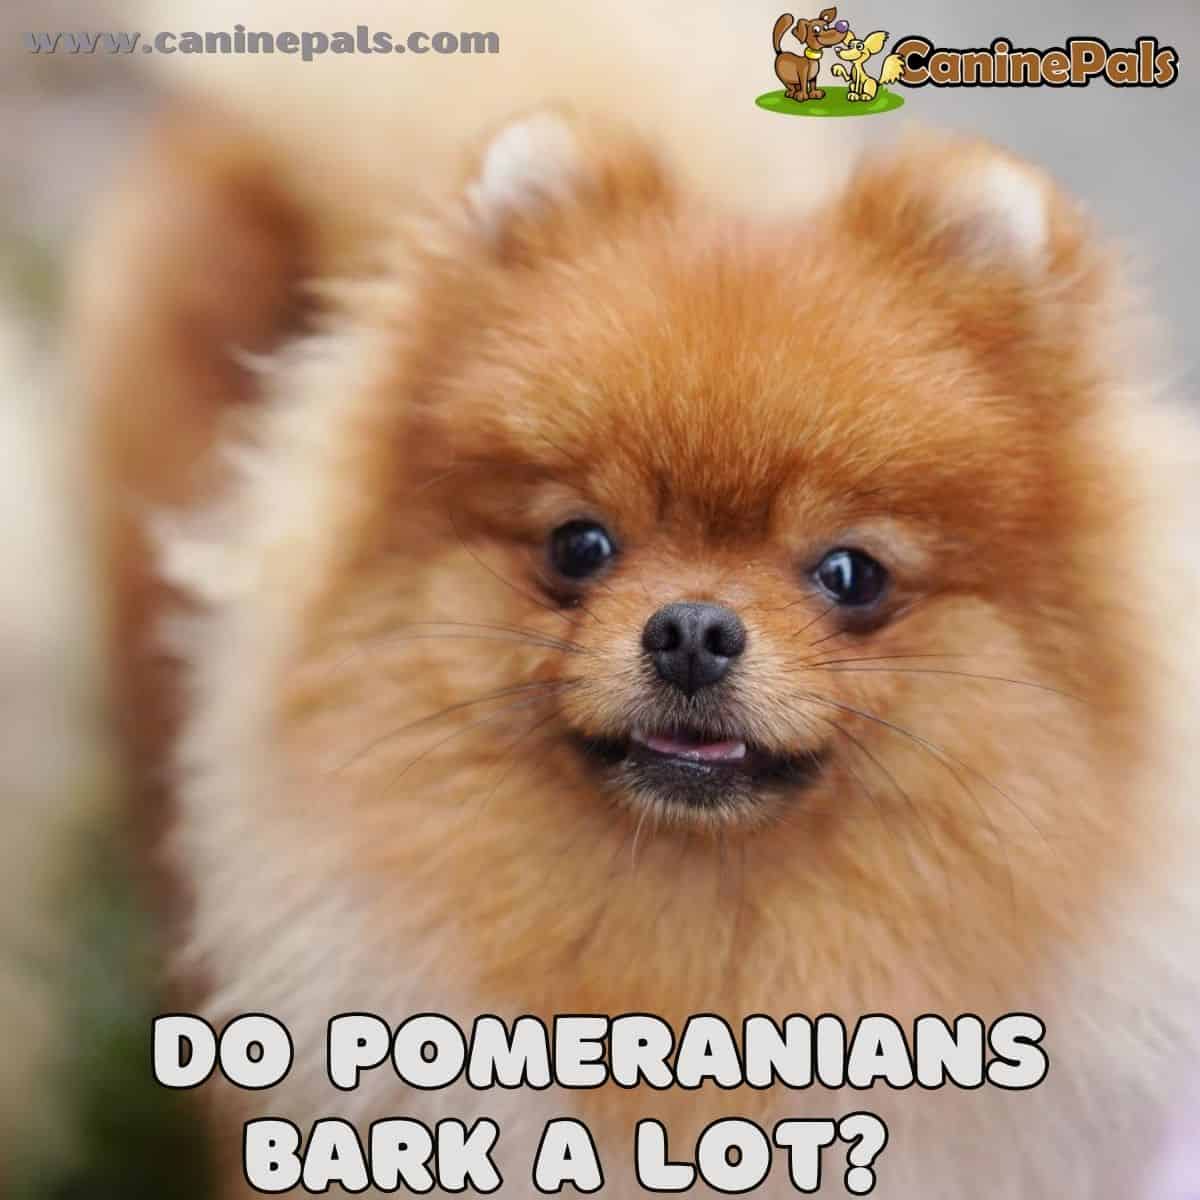 Do Pomeranians Bark a Lot?